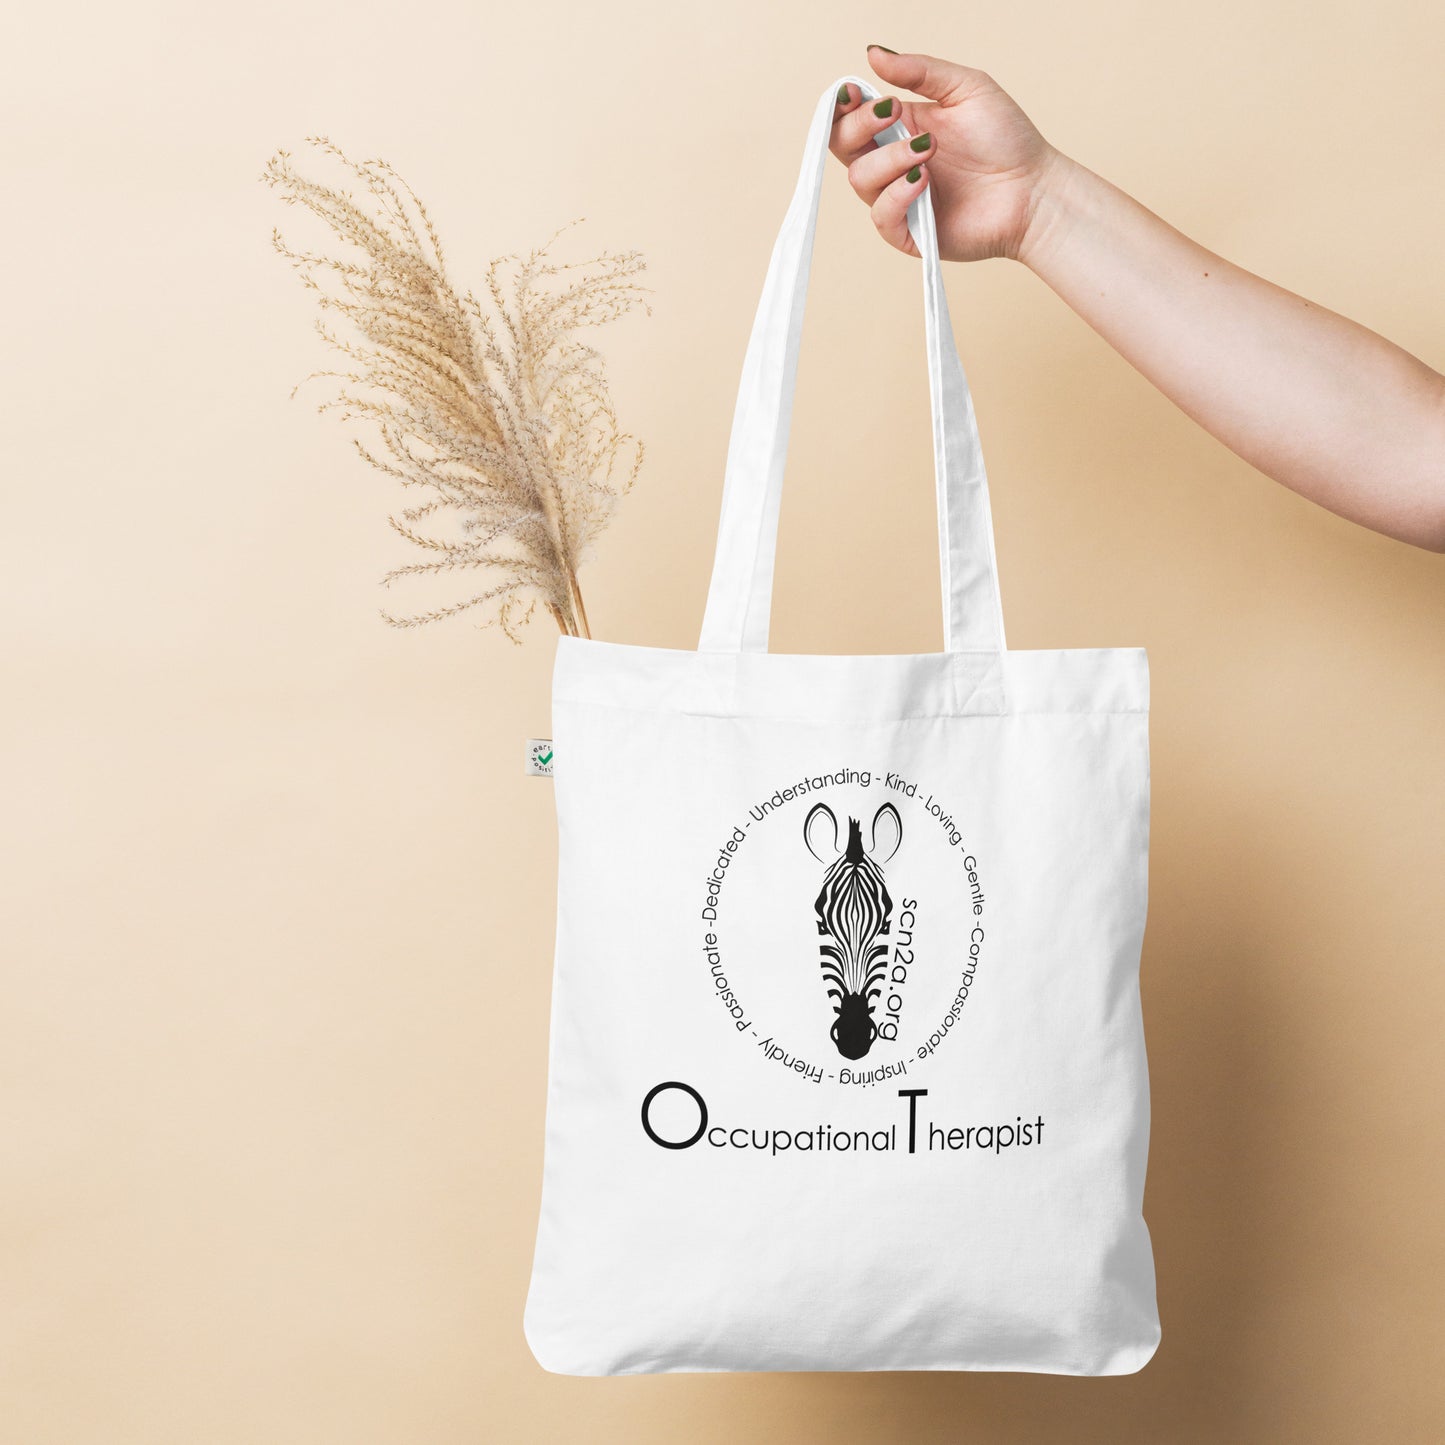 Occupational Therapist Organic fashion tote bag